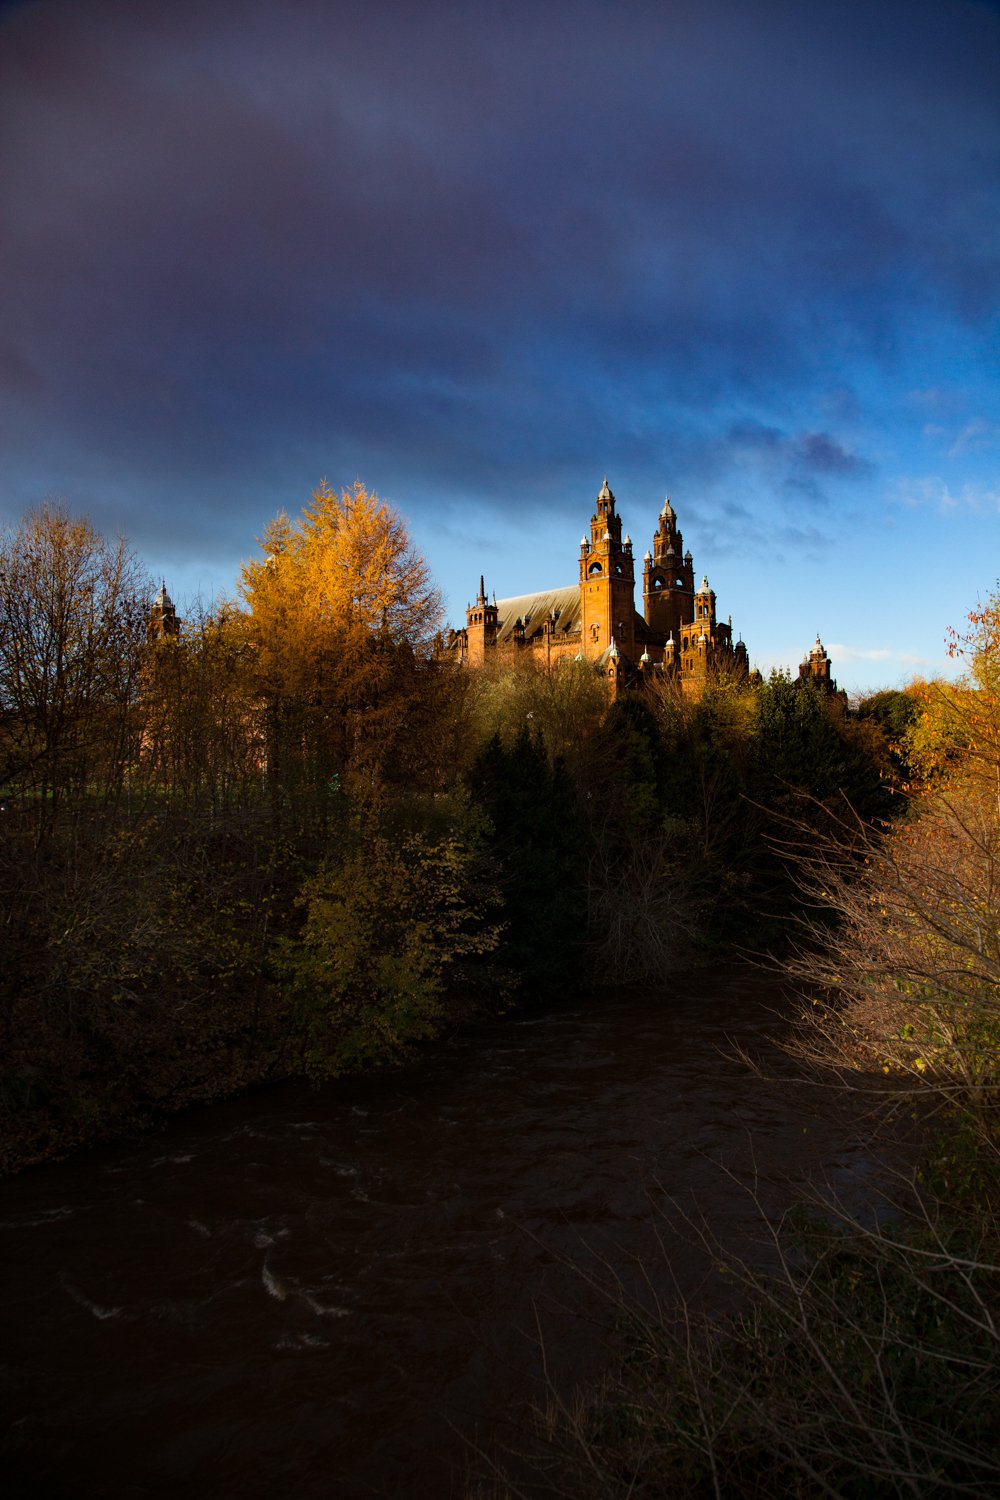 Шотландия, Глазго. Река Келвин, Арт-галерея и Музей Келвингроув на закате